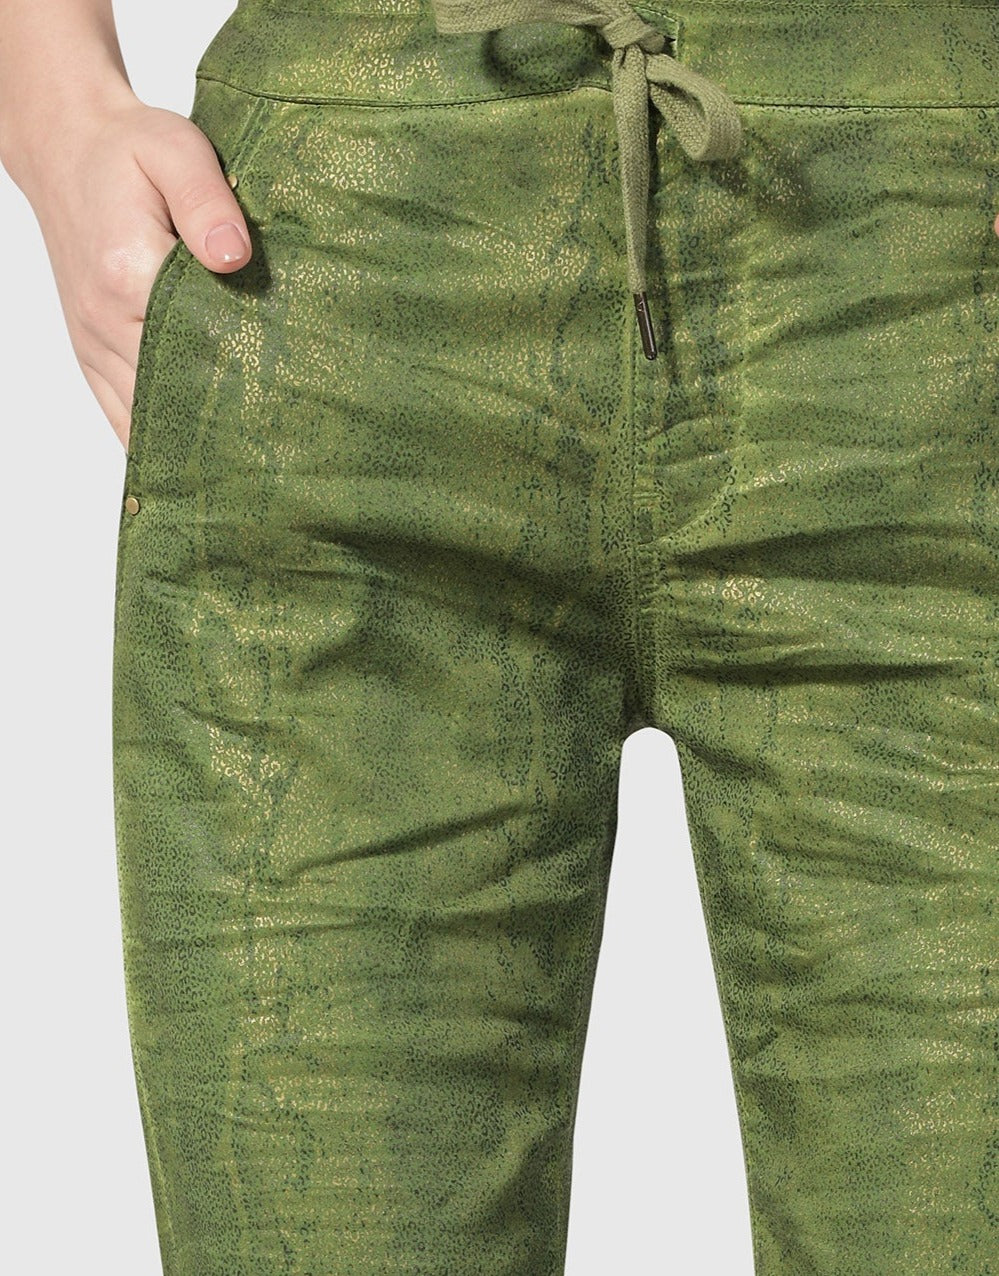 Fearless Iconic Stretch Jeans, Green – Alembika U.S.